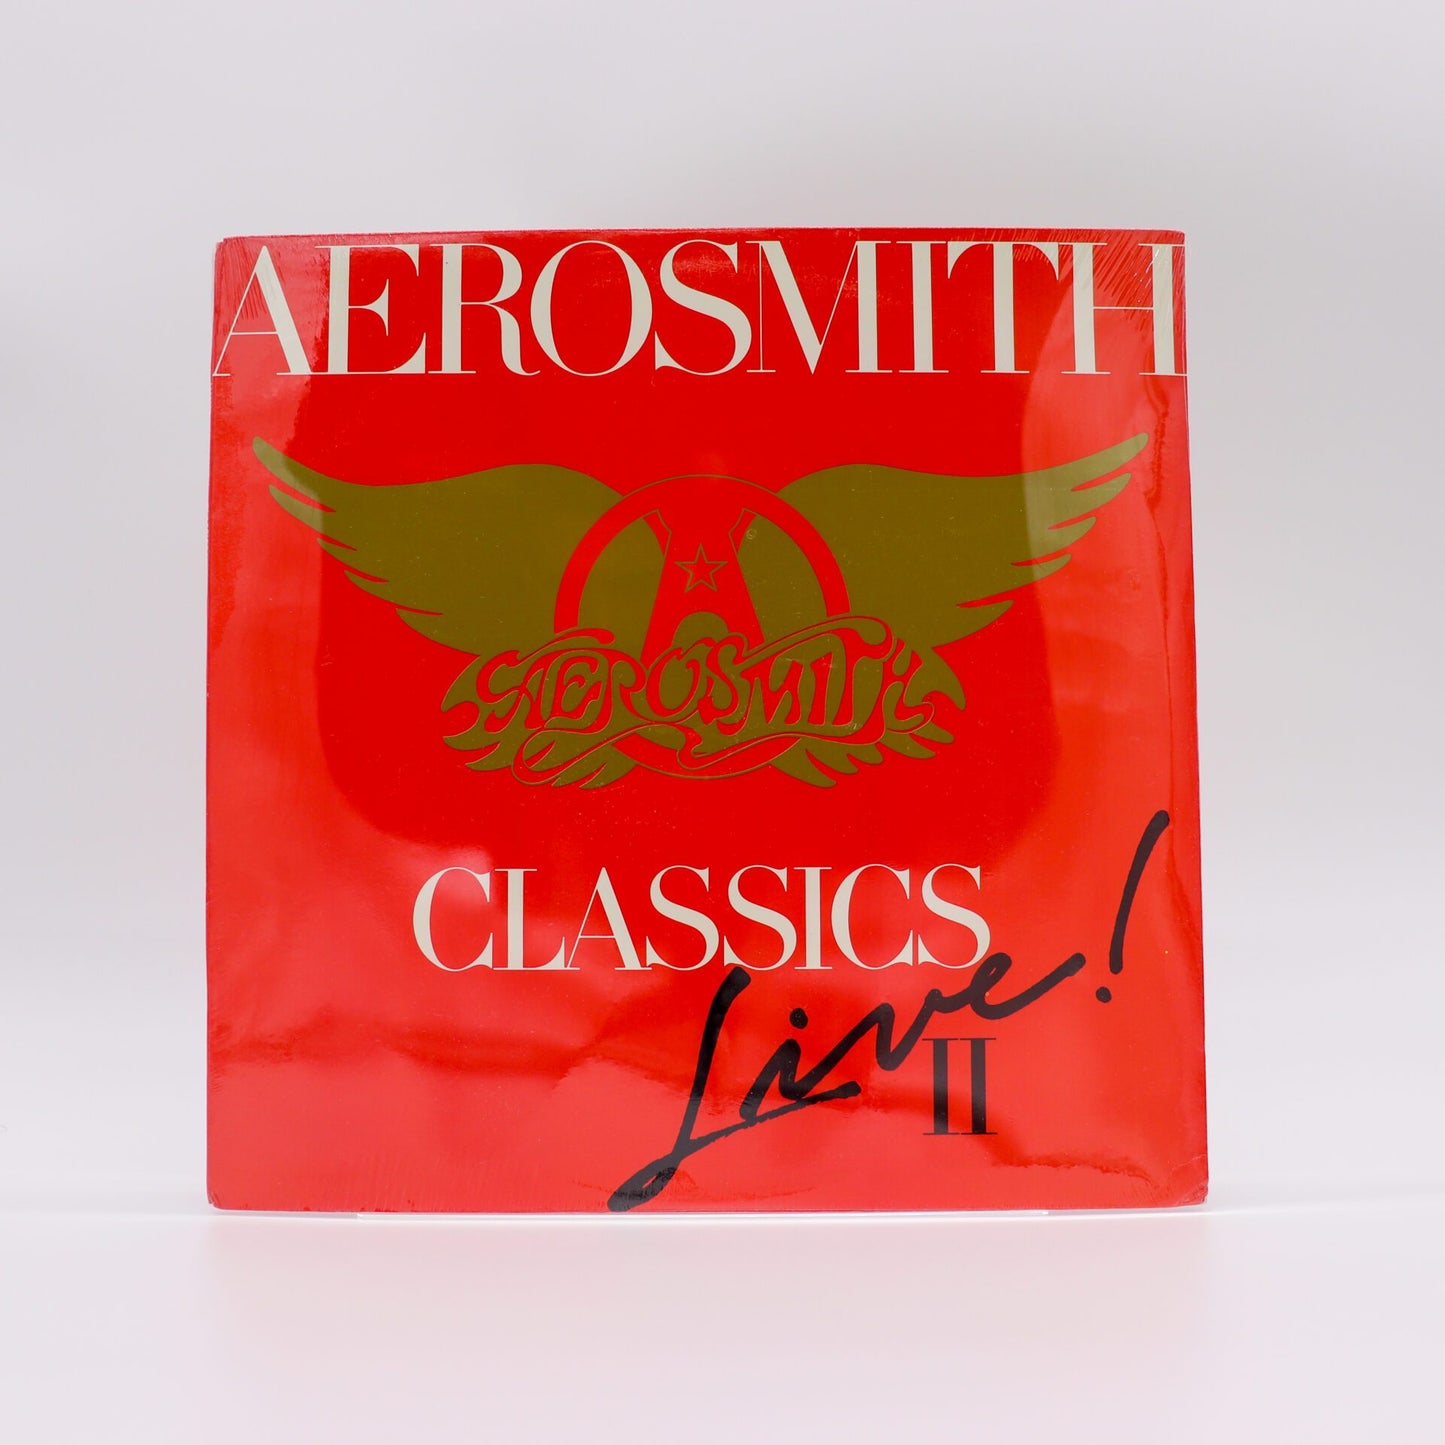 Original, Sealed Aerosmith Classics Live II